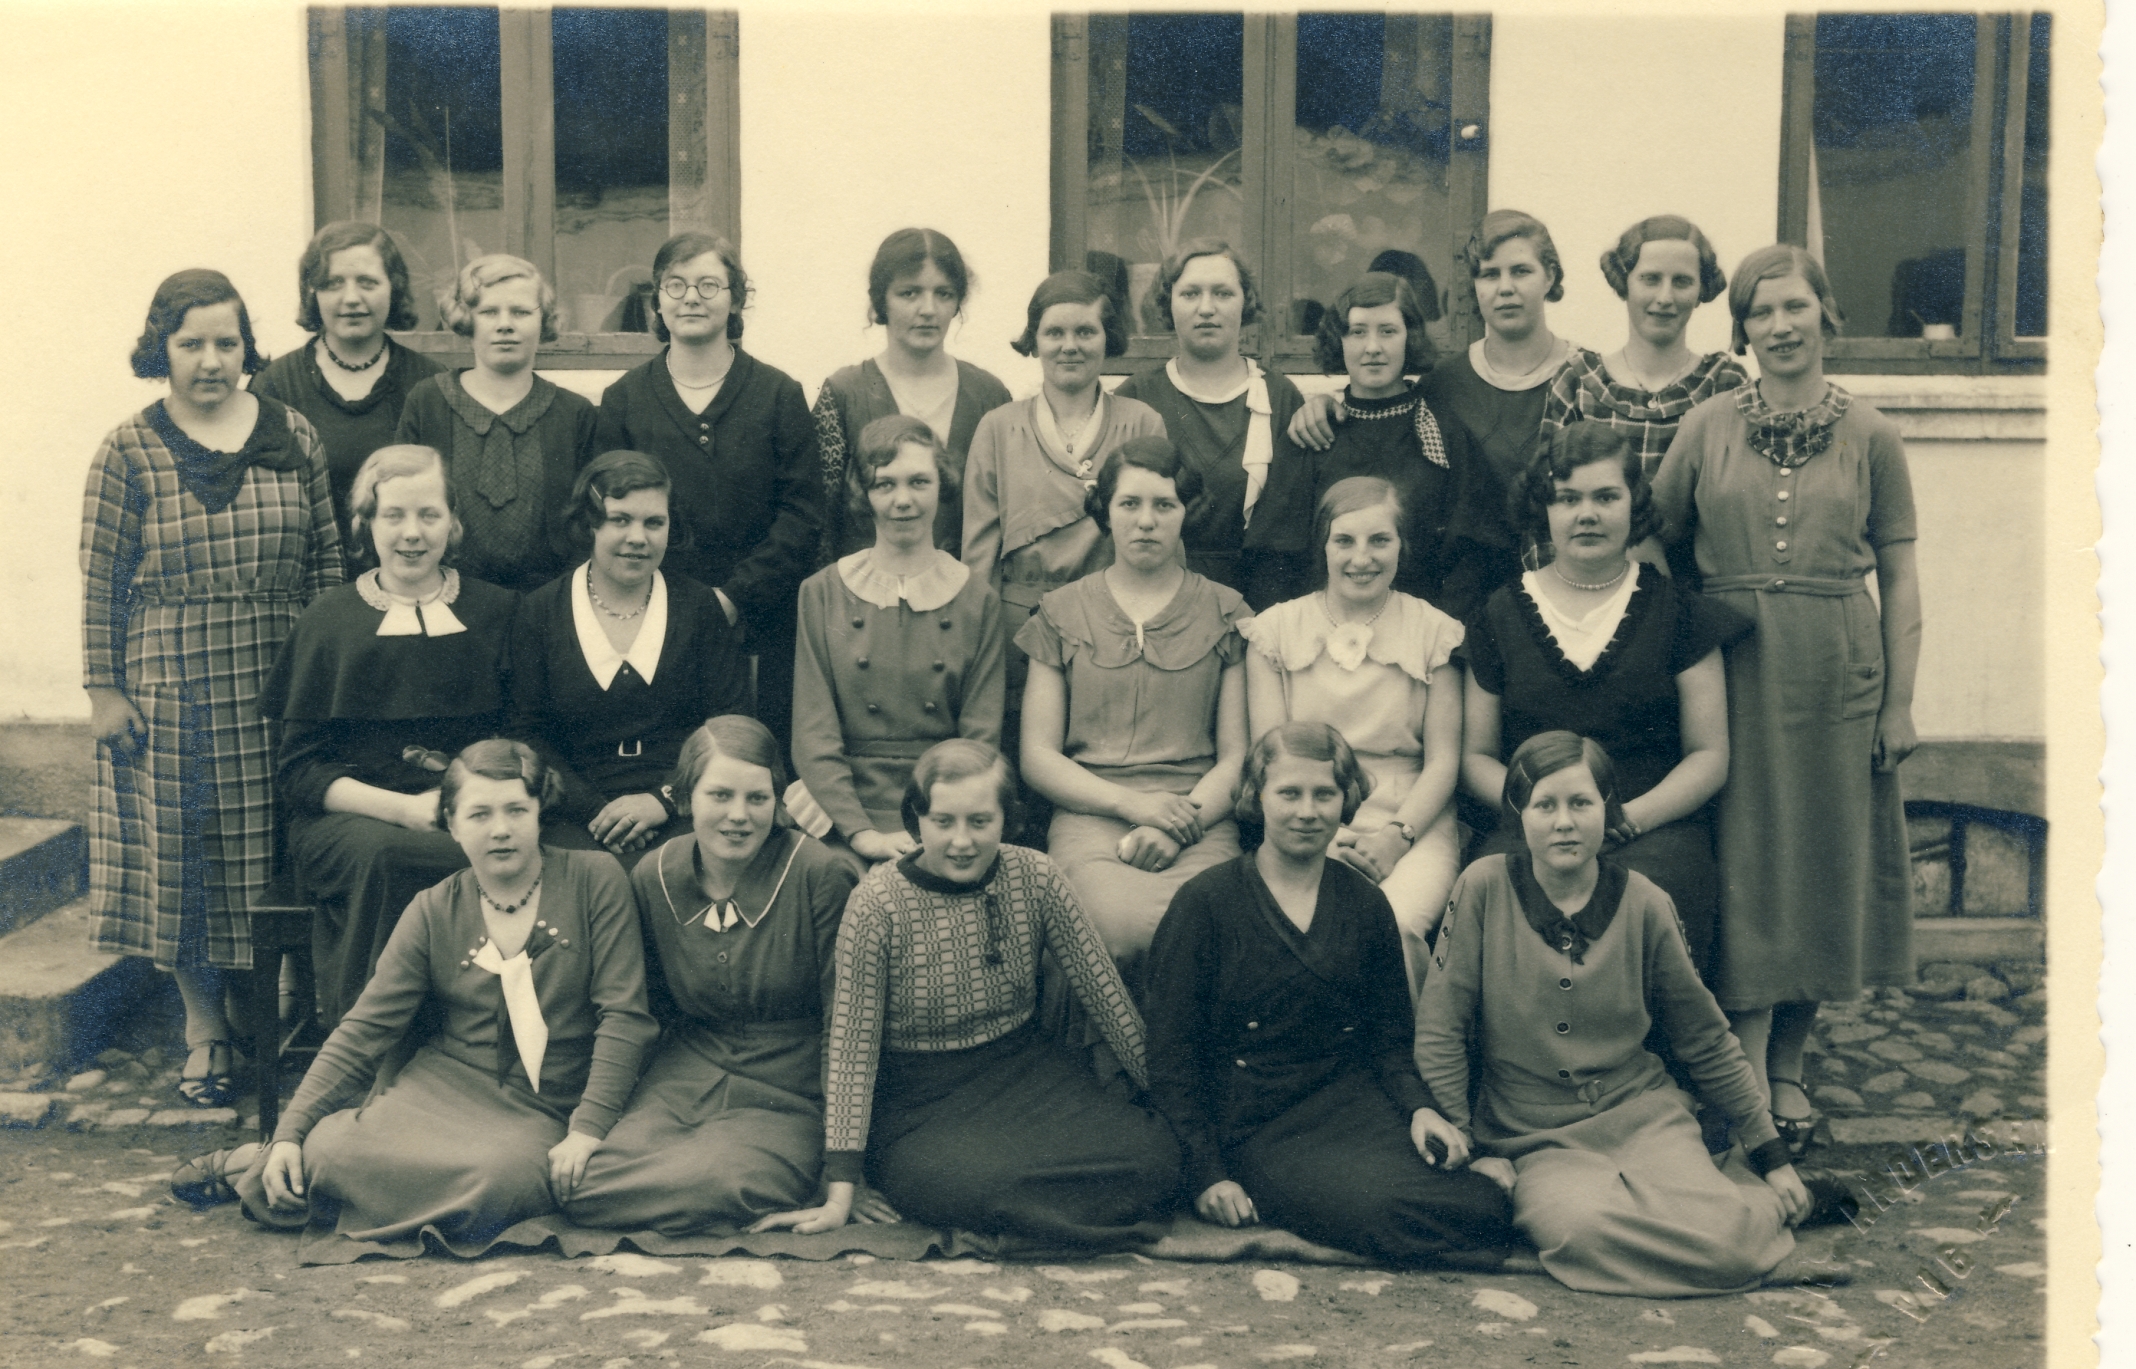 Grevinge Husmandsforenings syskole - 1934-1935 (B8993)